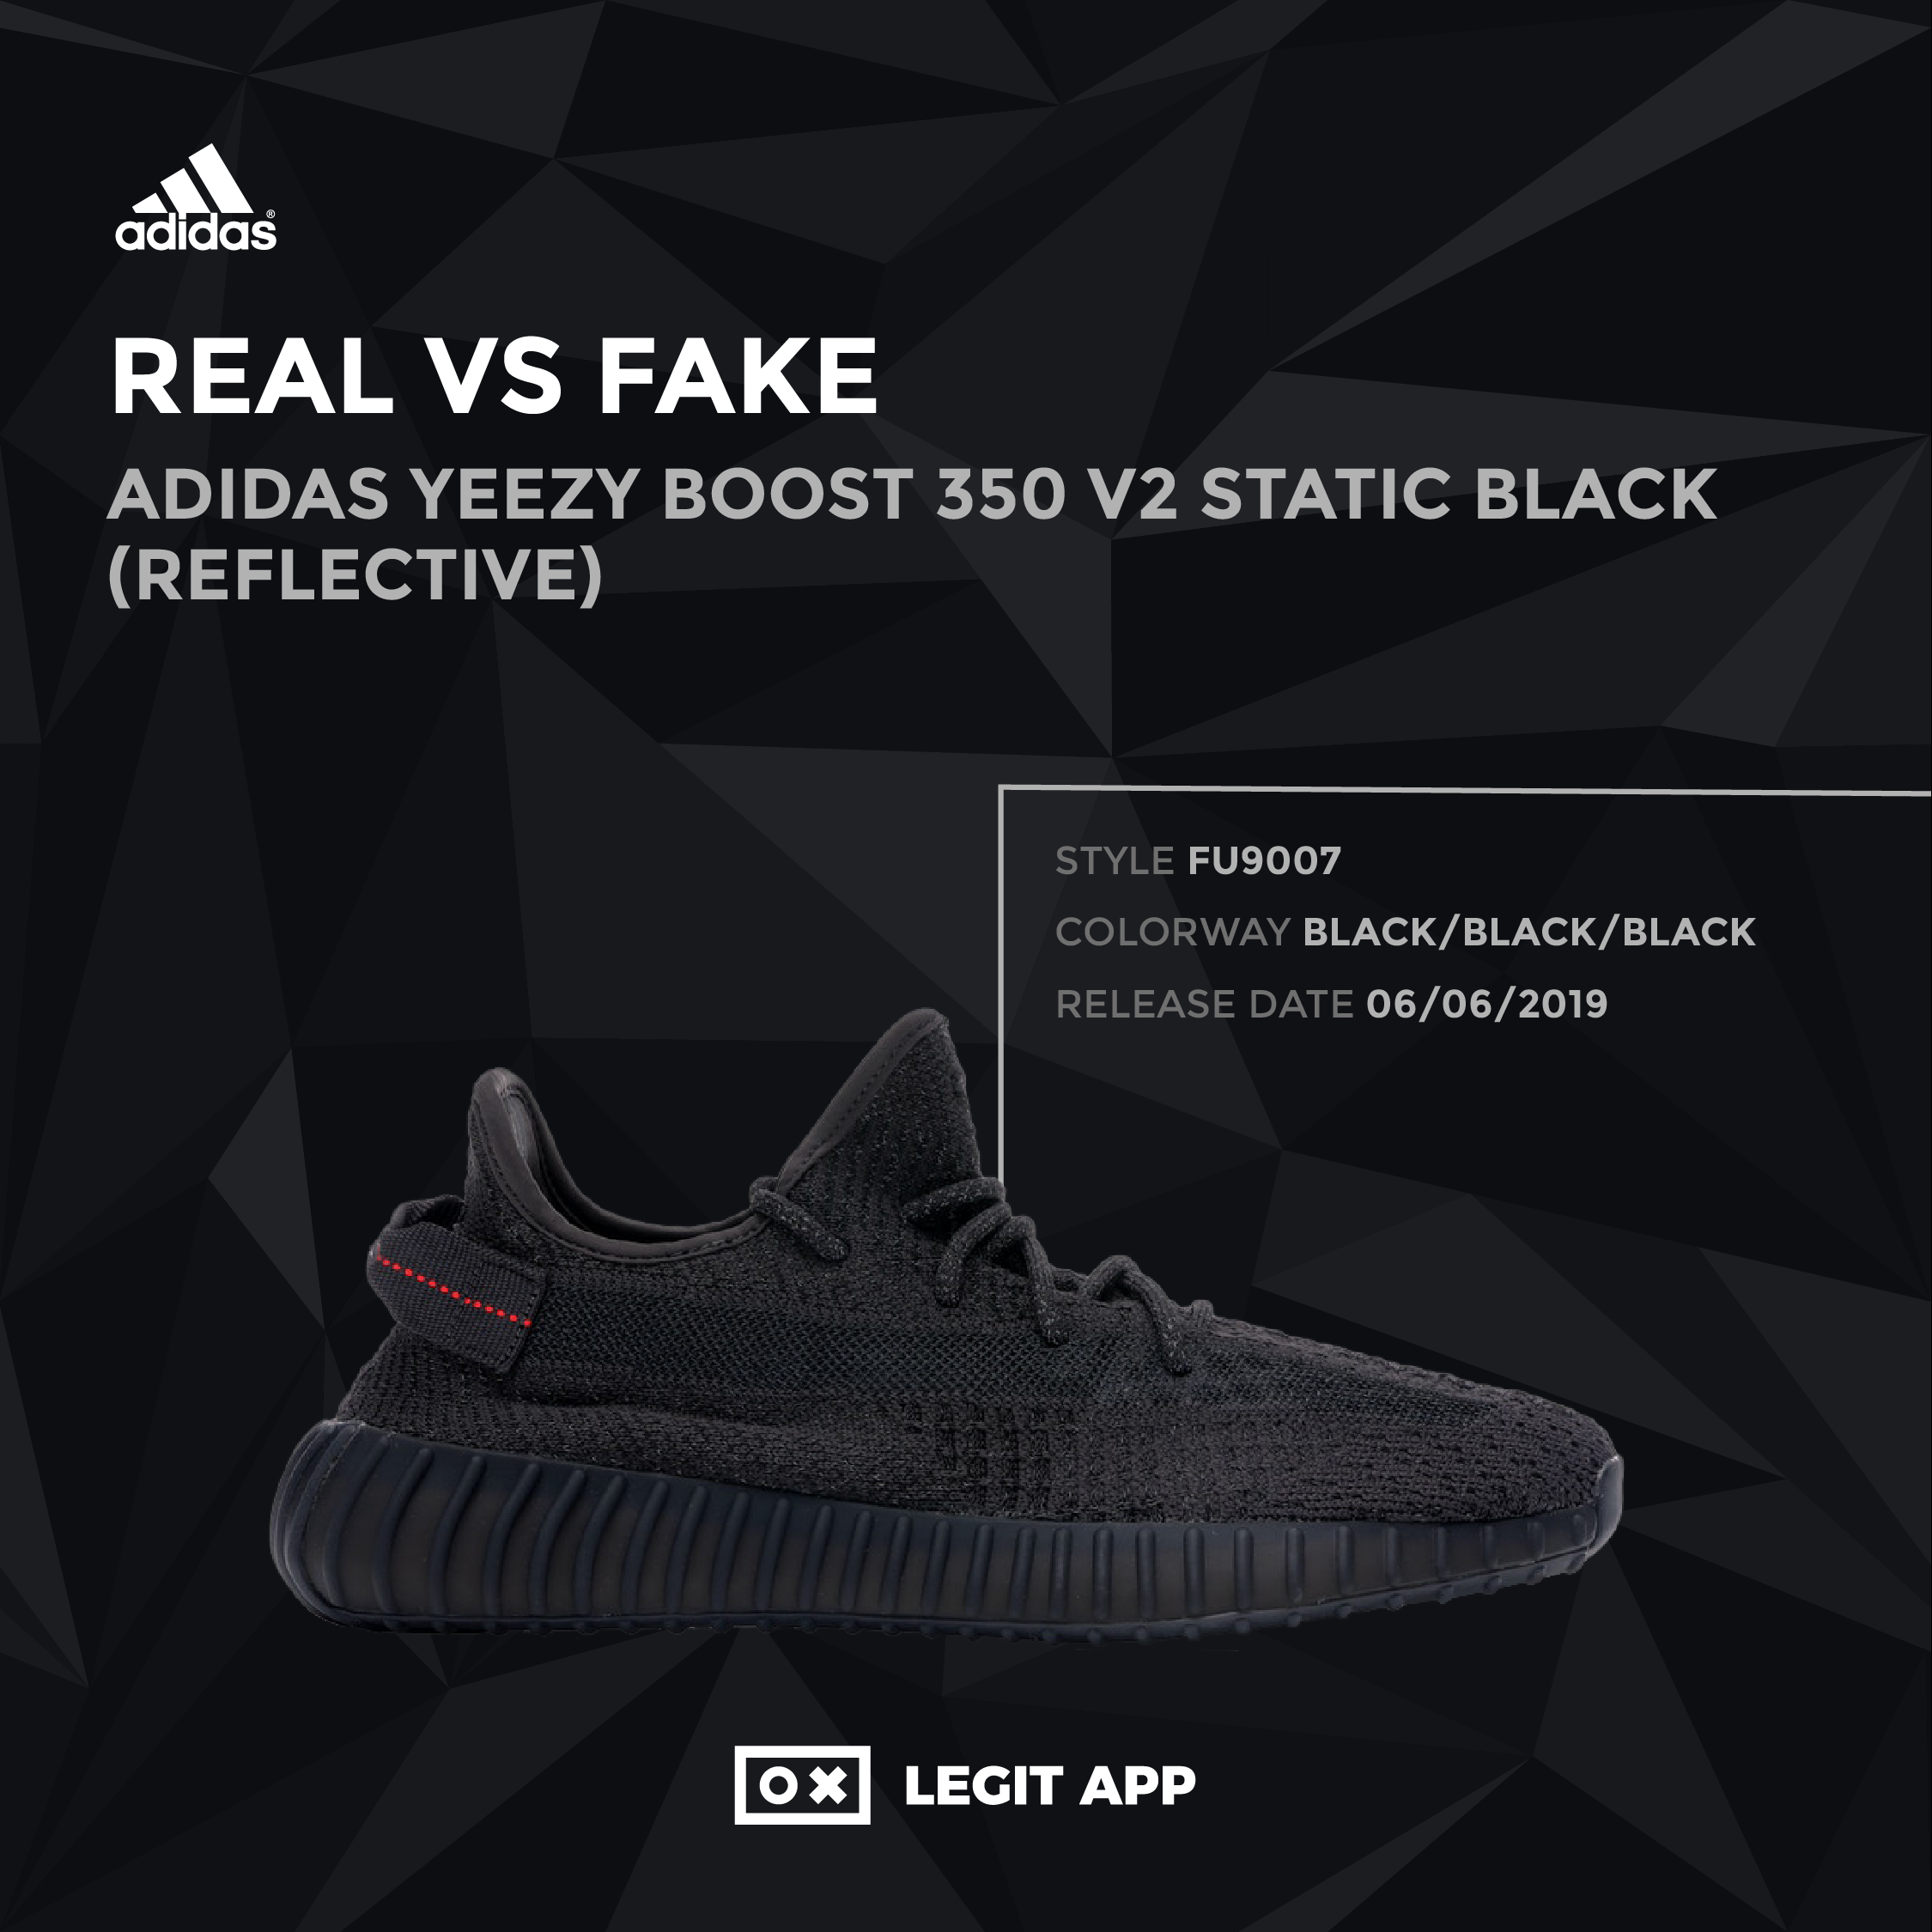 REAL VS REPLICA - adidas Yeezy Boost 350 V2 Static Black